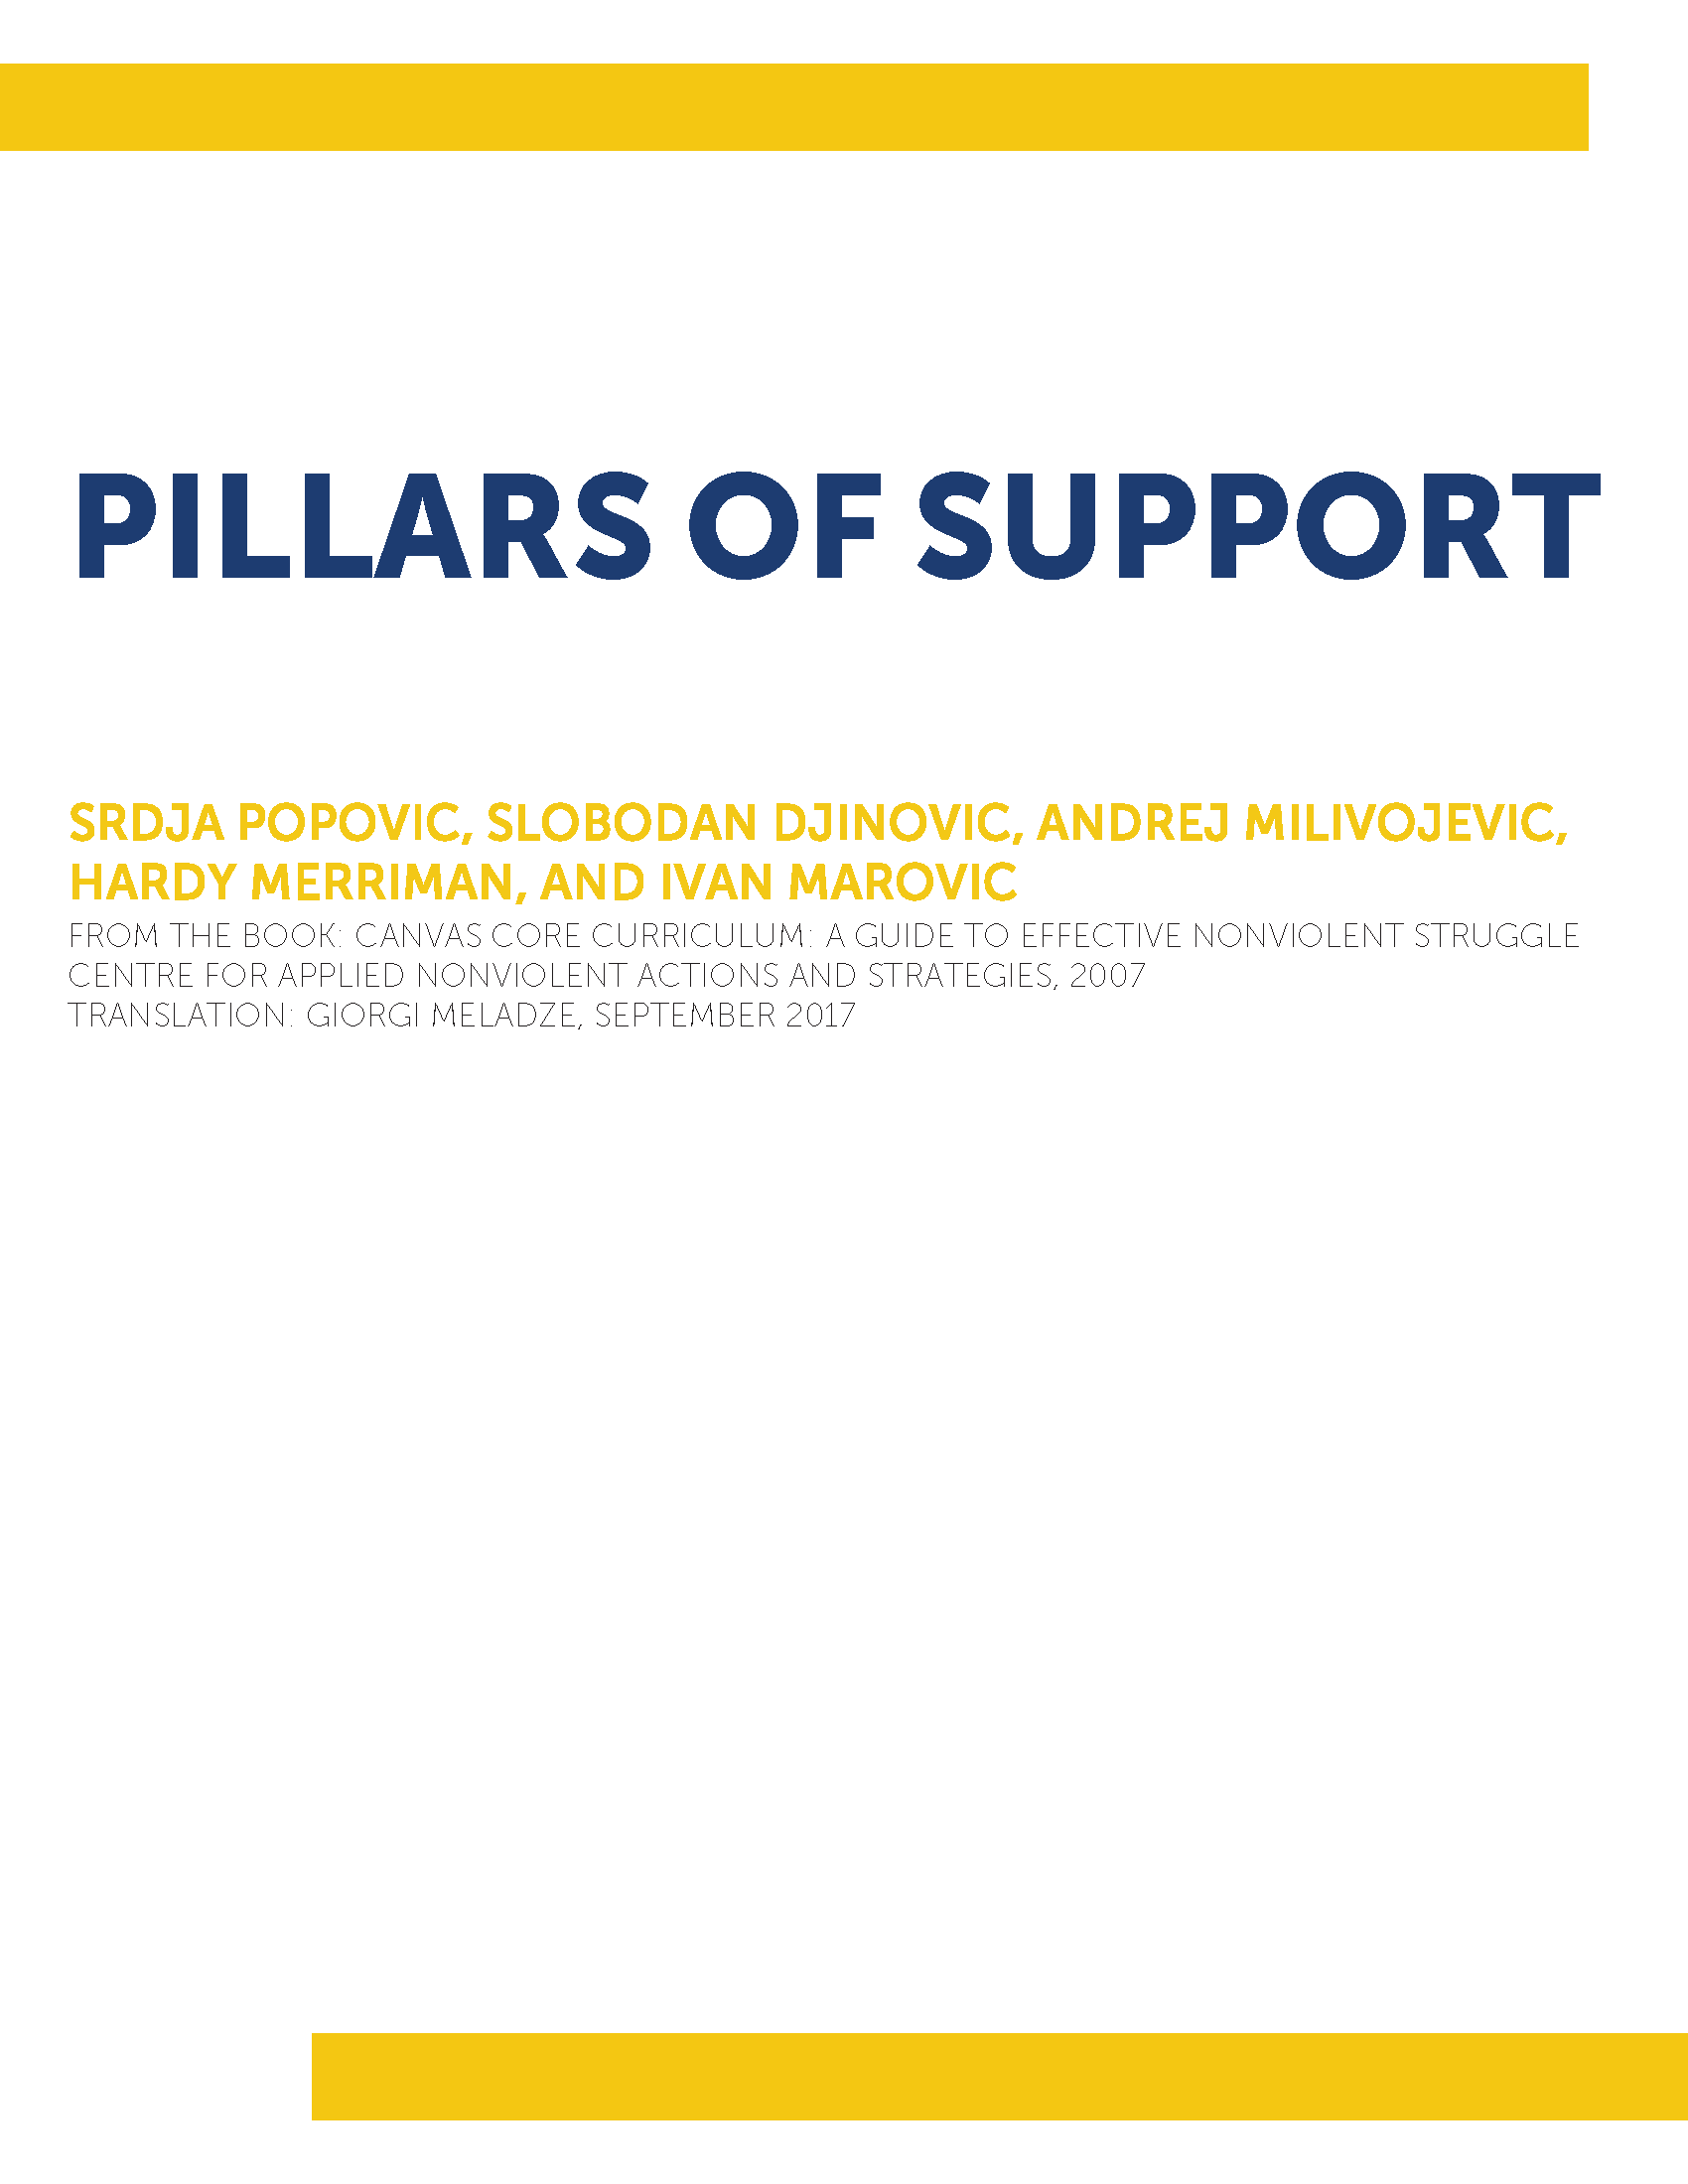 Pillars of Support